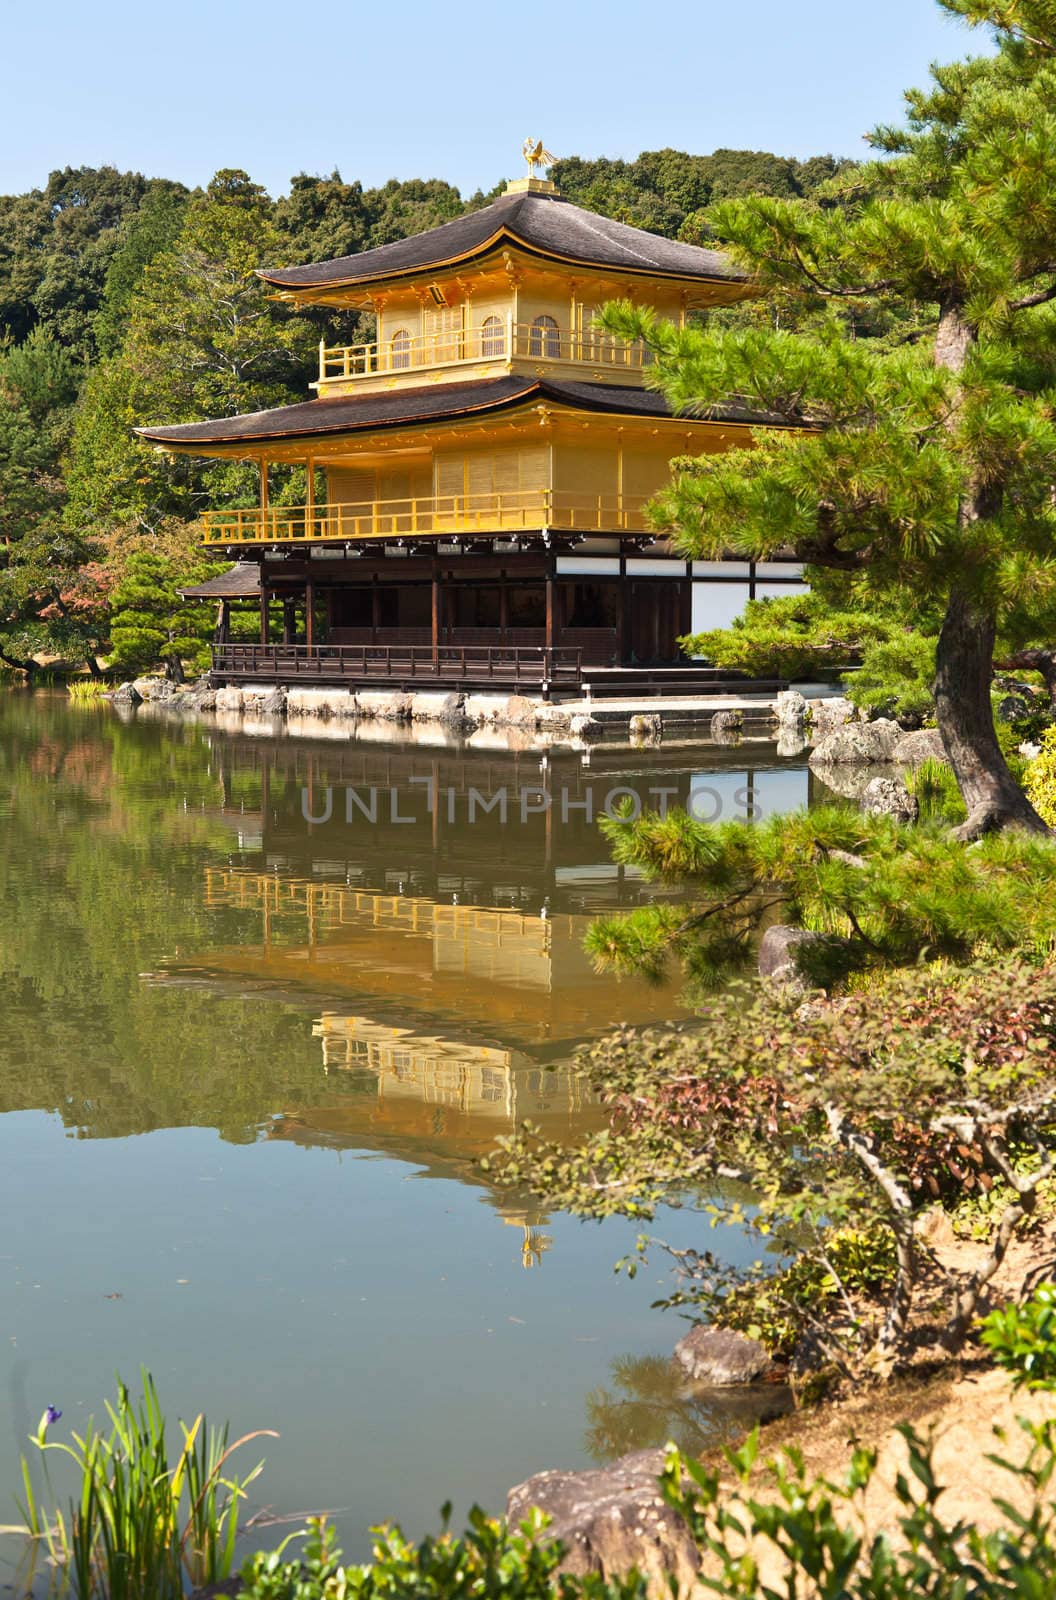 Japanese golden pagoda by Suriyaphoto